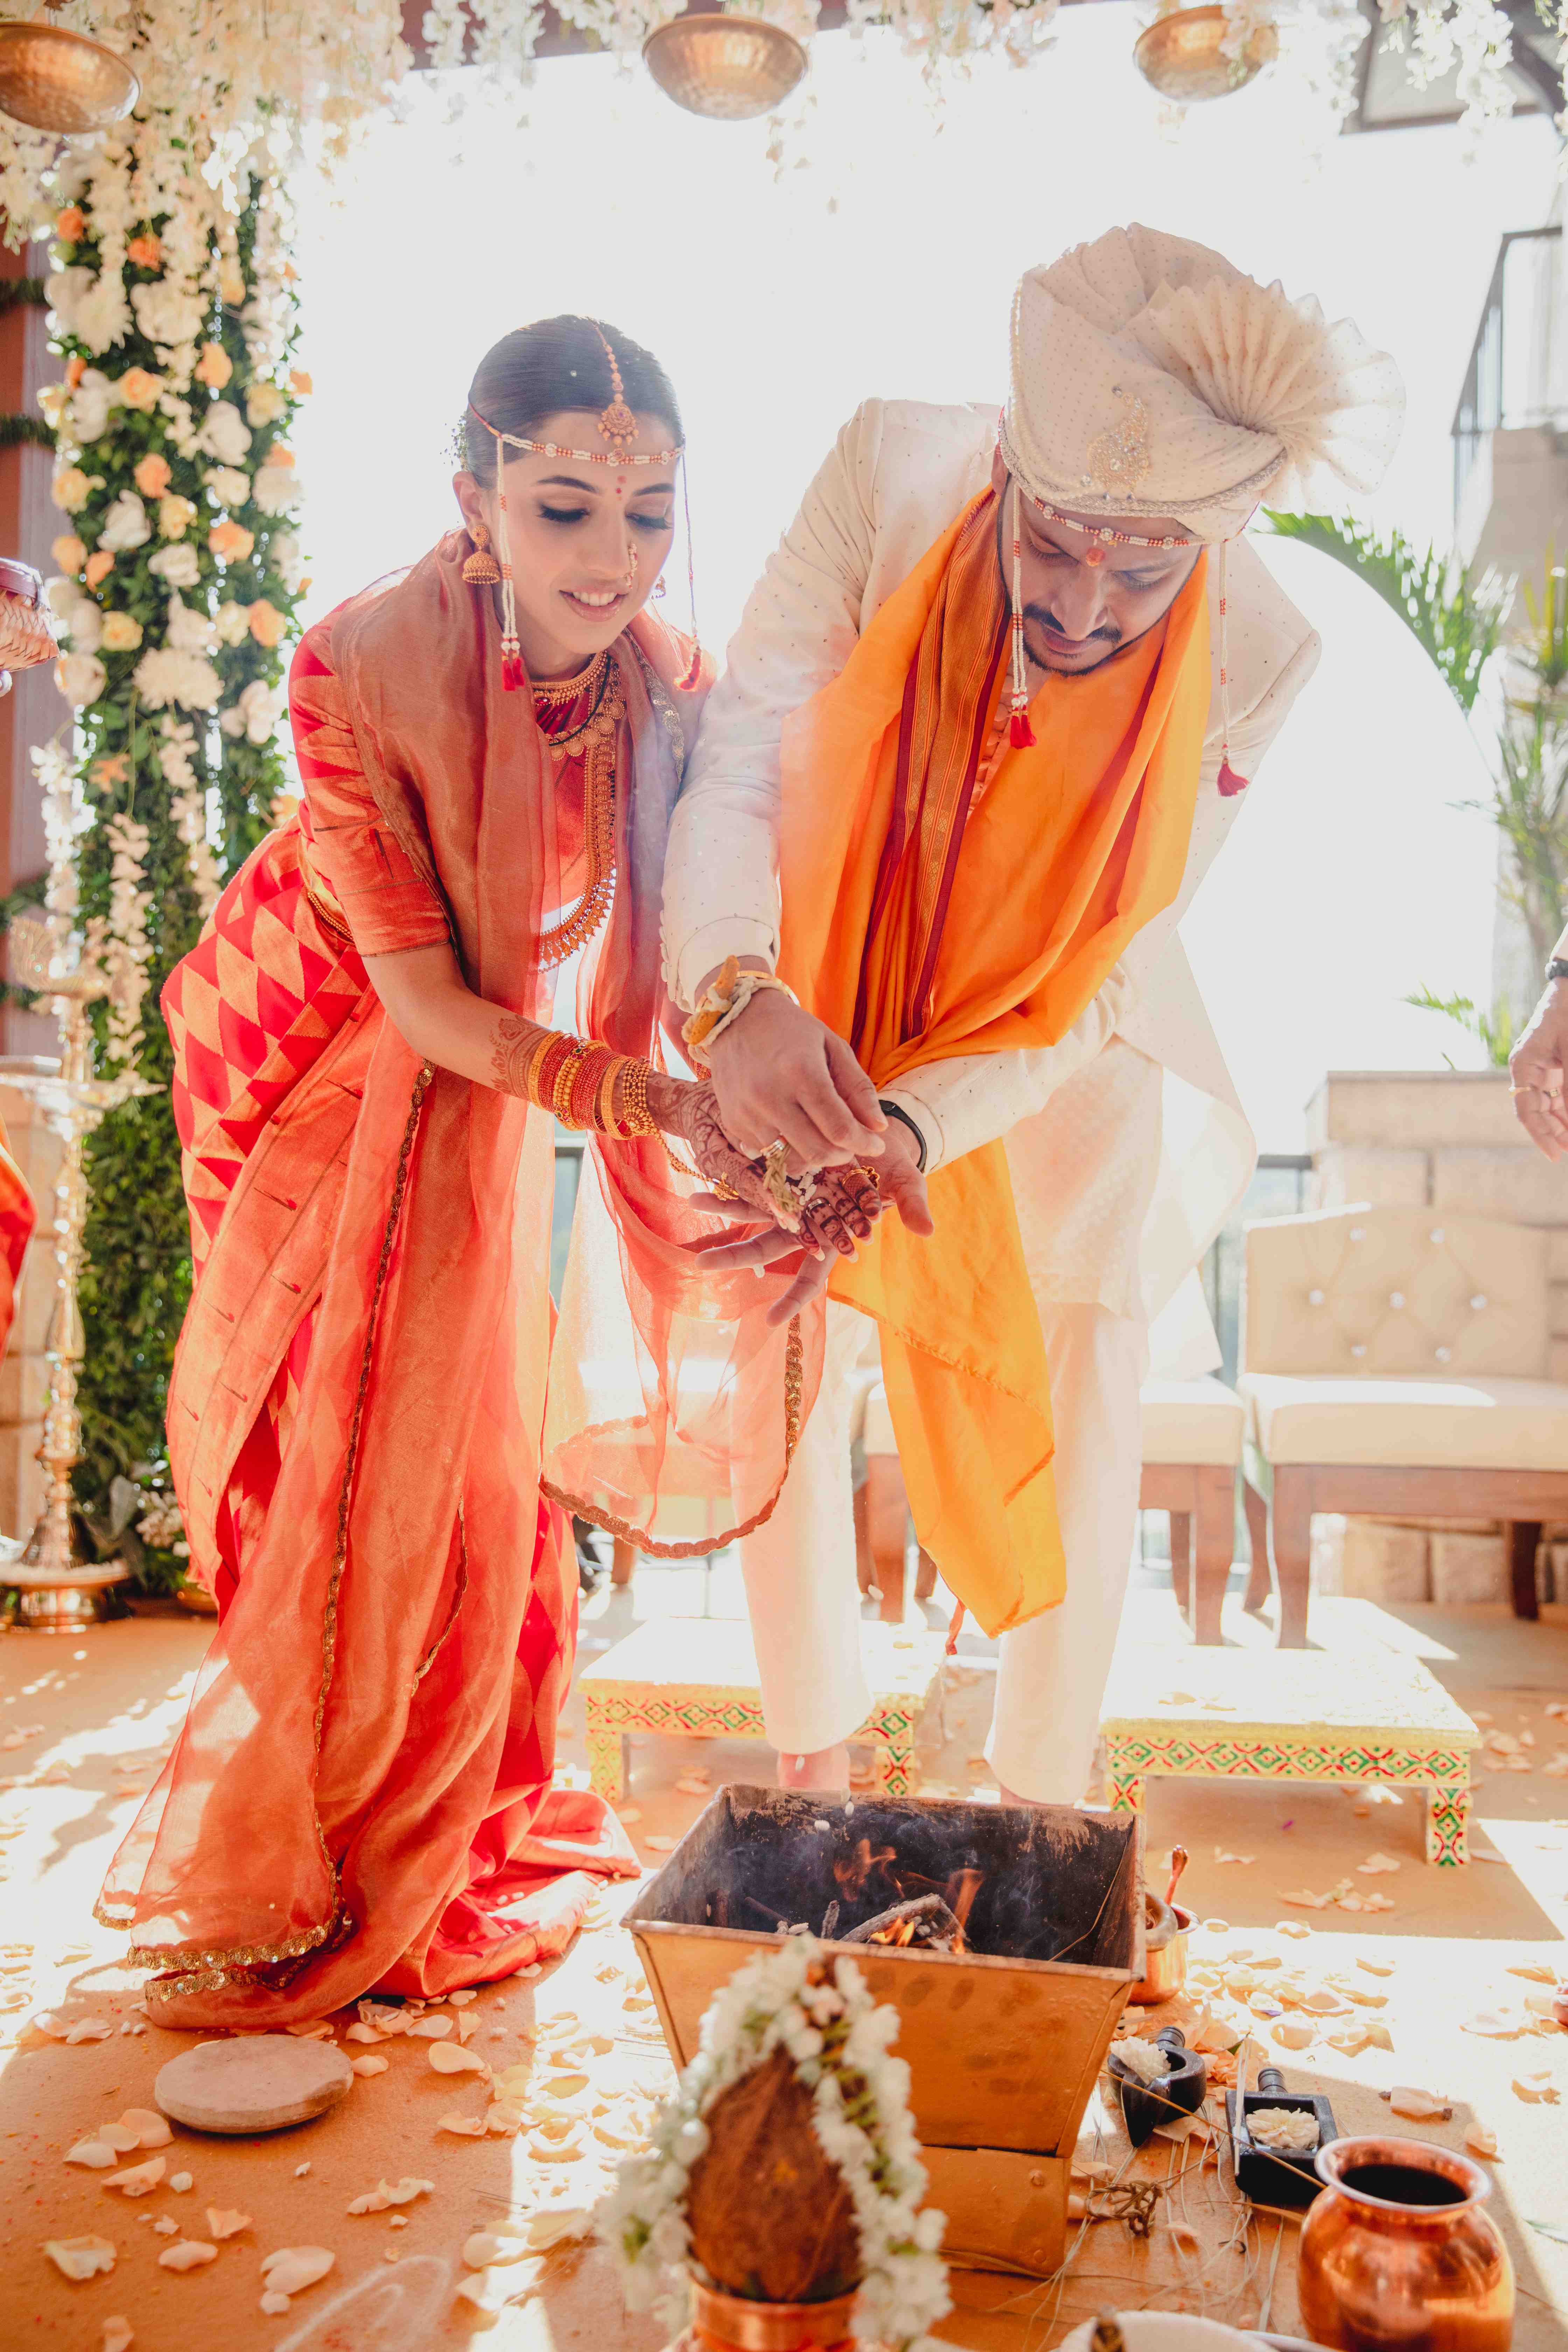 Vedhika & Kamlesh’s Maharashtrian Wedding Will Leave You Awestruck!